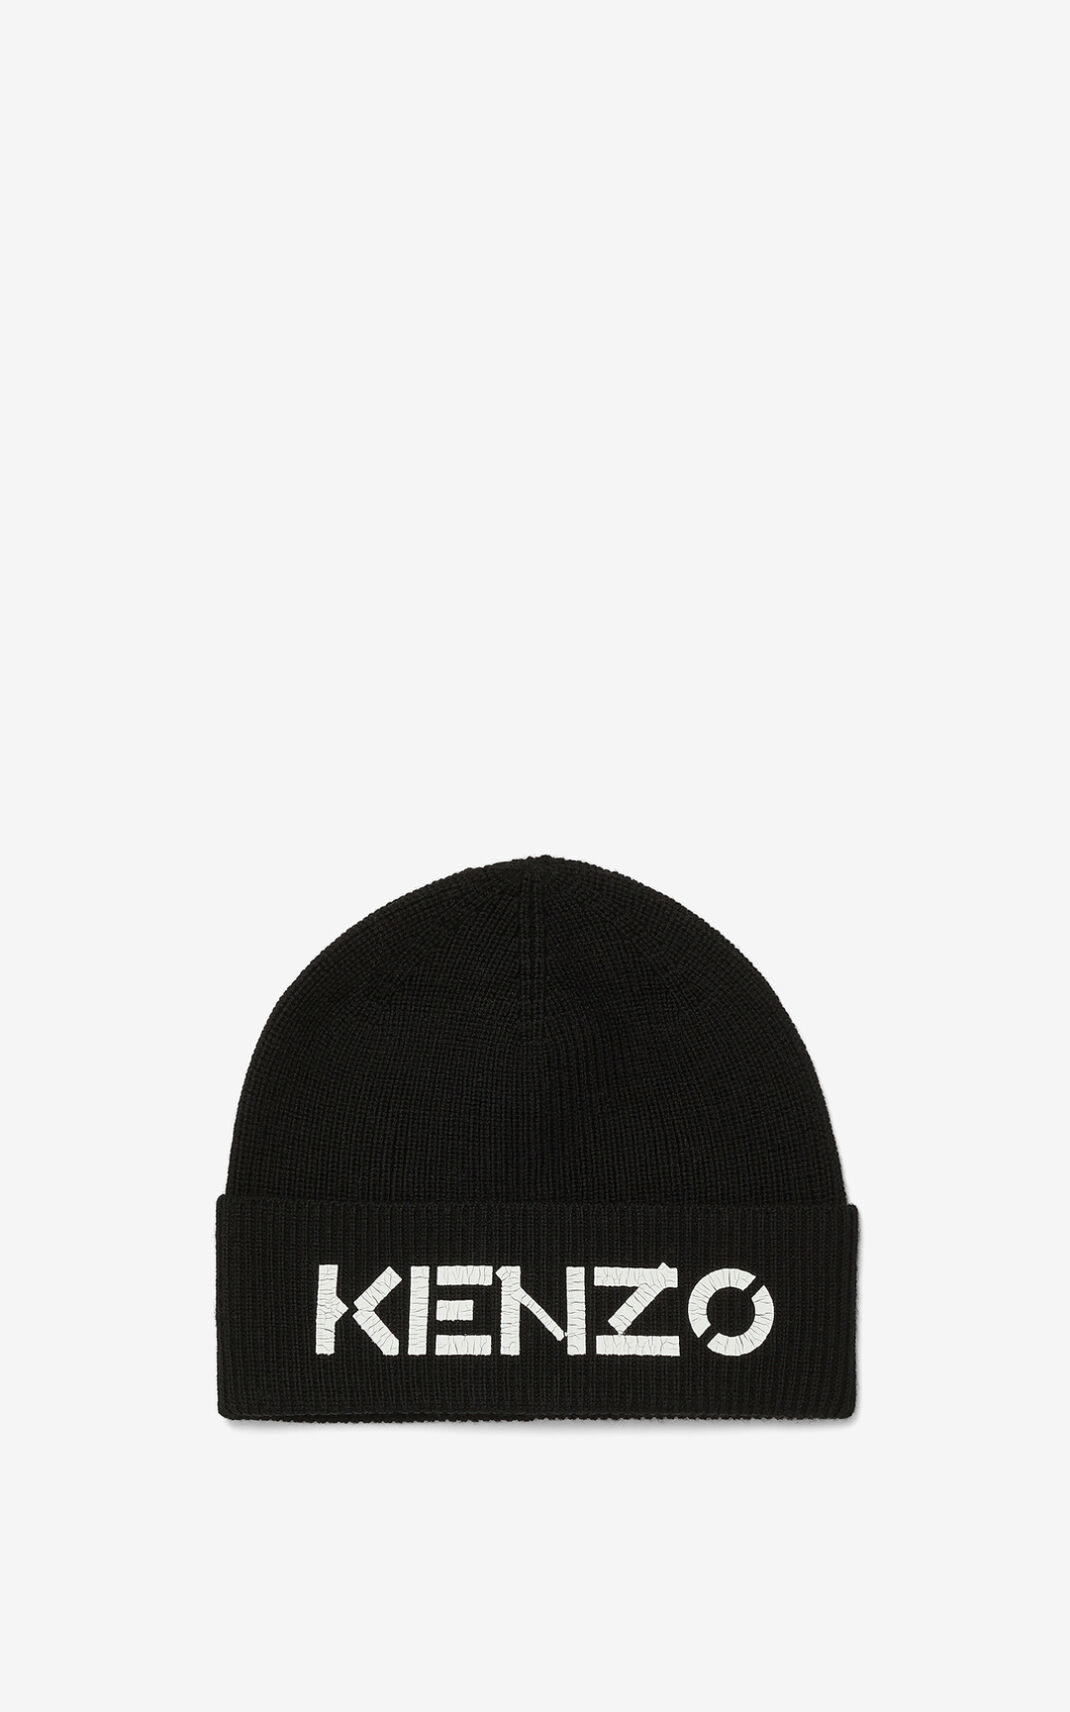 Kenzo Logo ニット ビーニー レディース 黒 - CNWFKH681